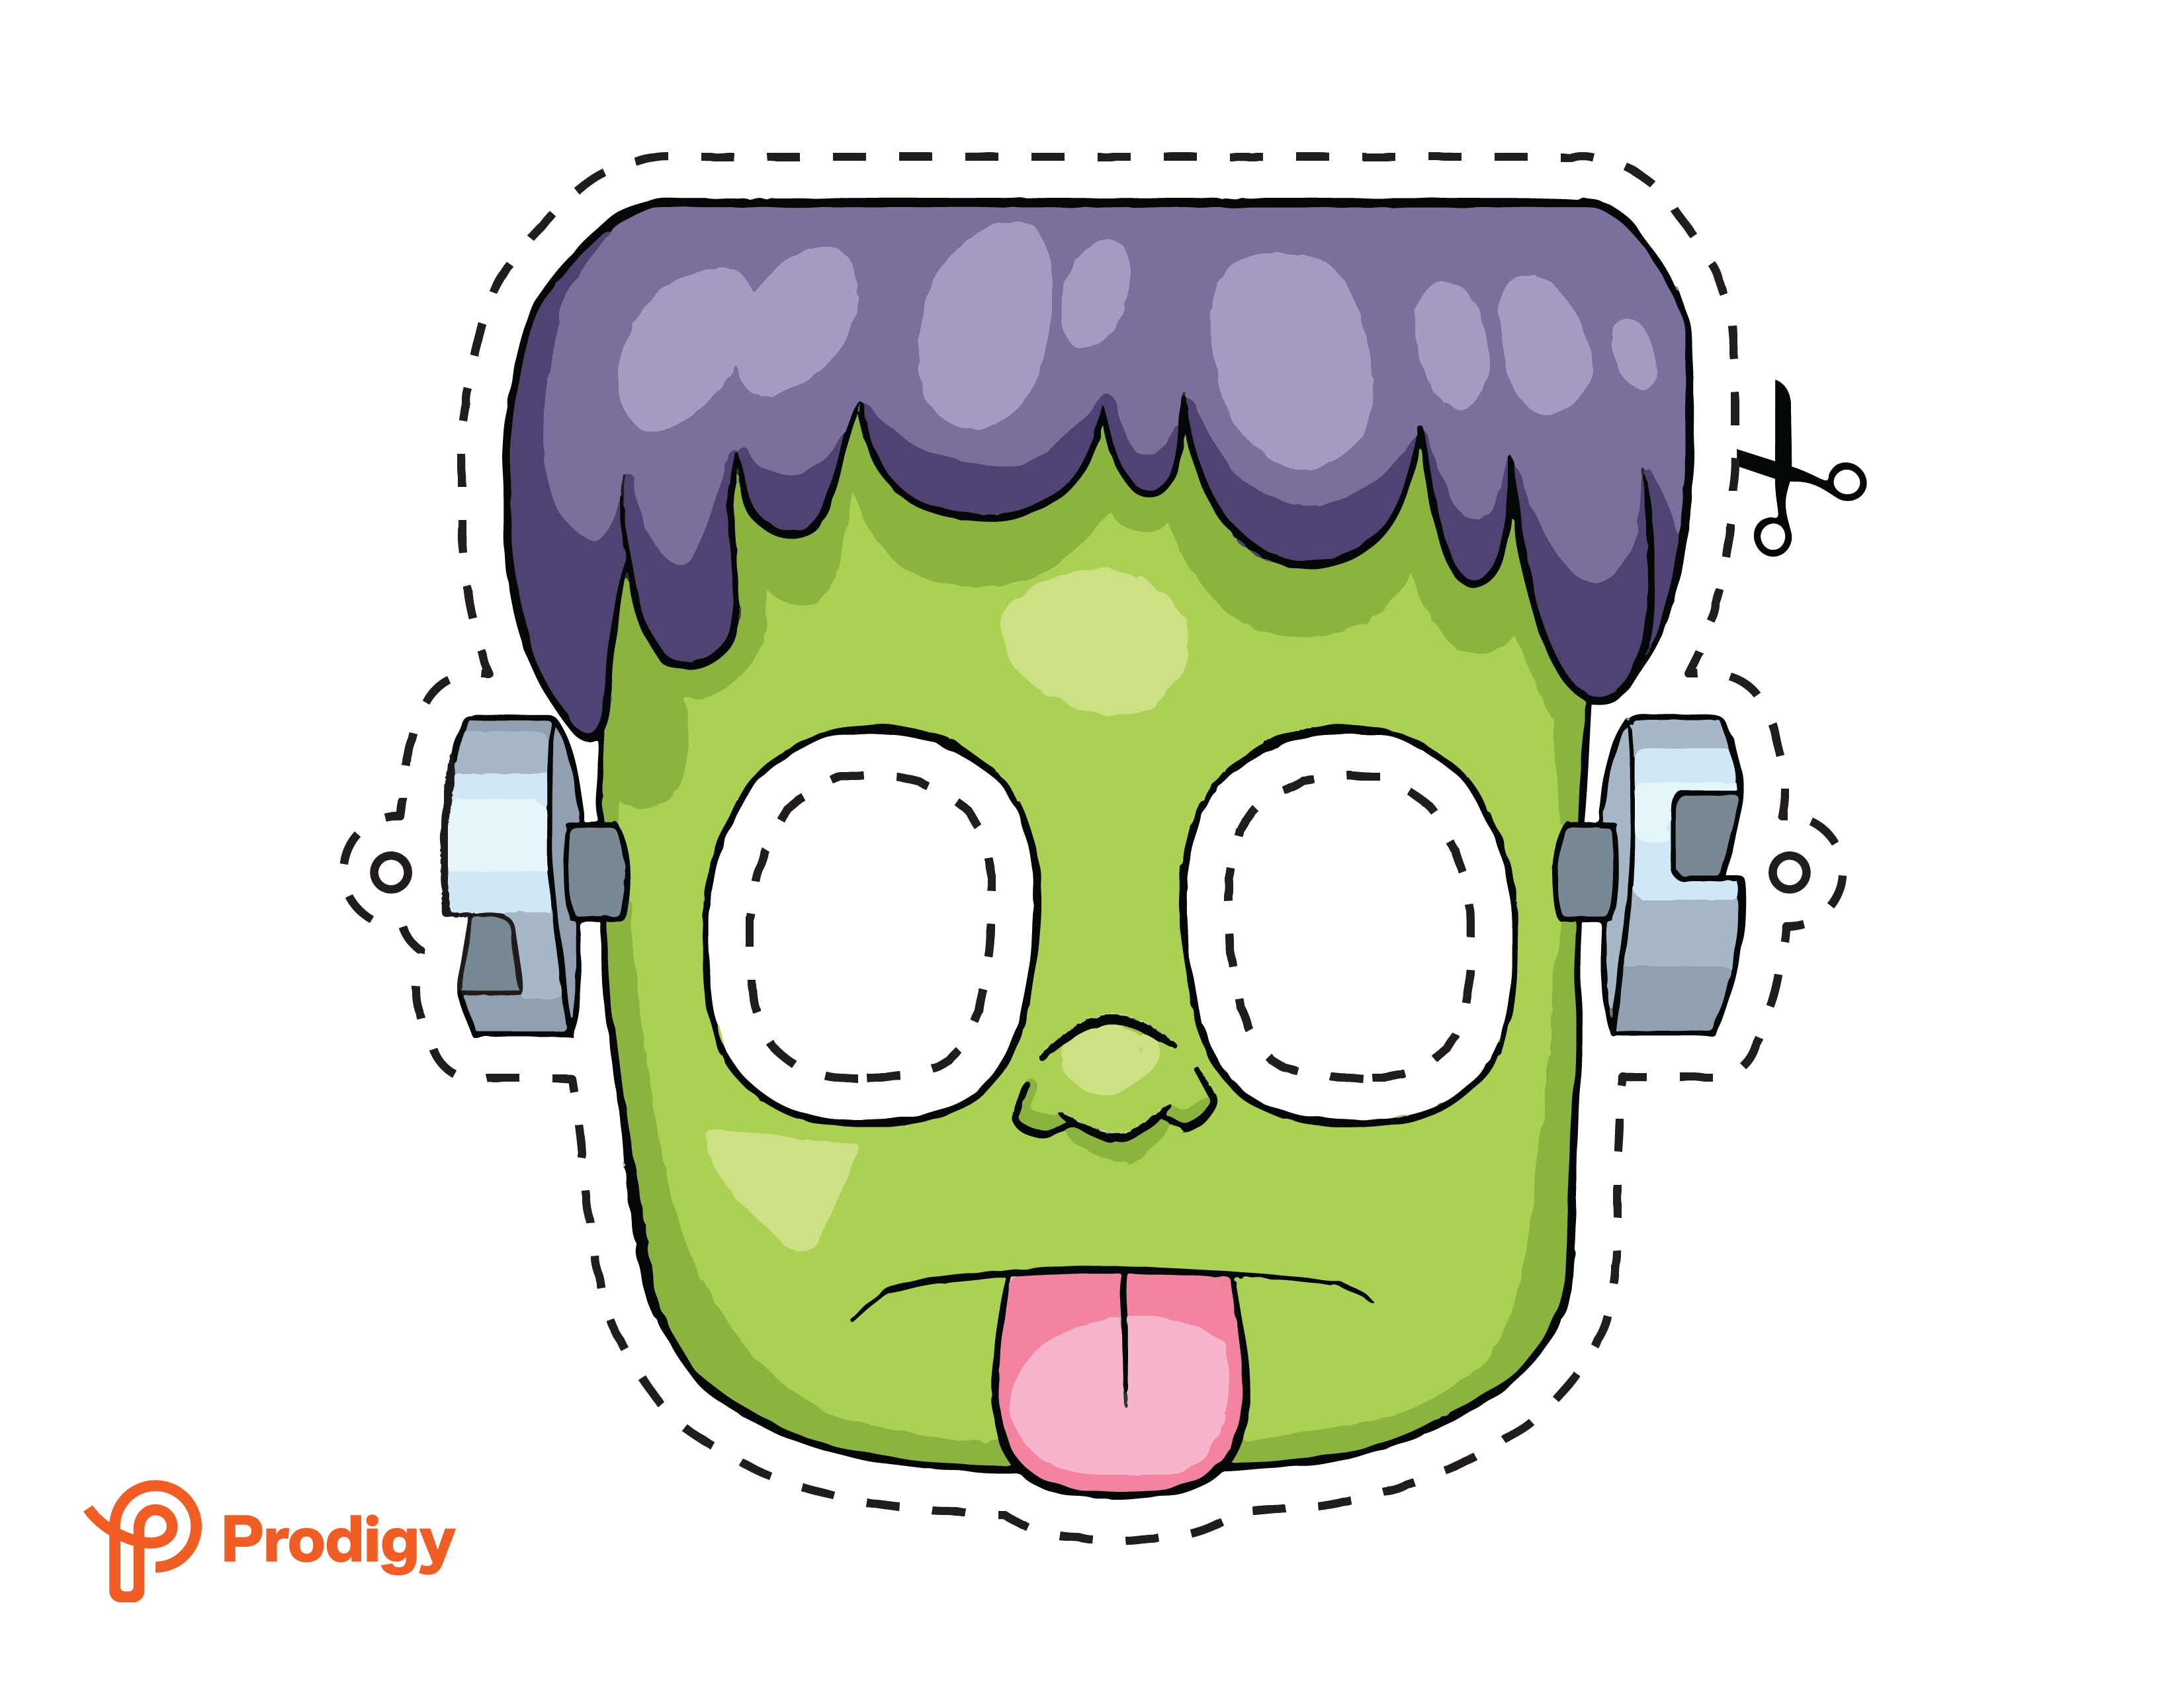 Printable Prodigy Frankenstein monster mask, in color